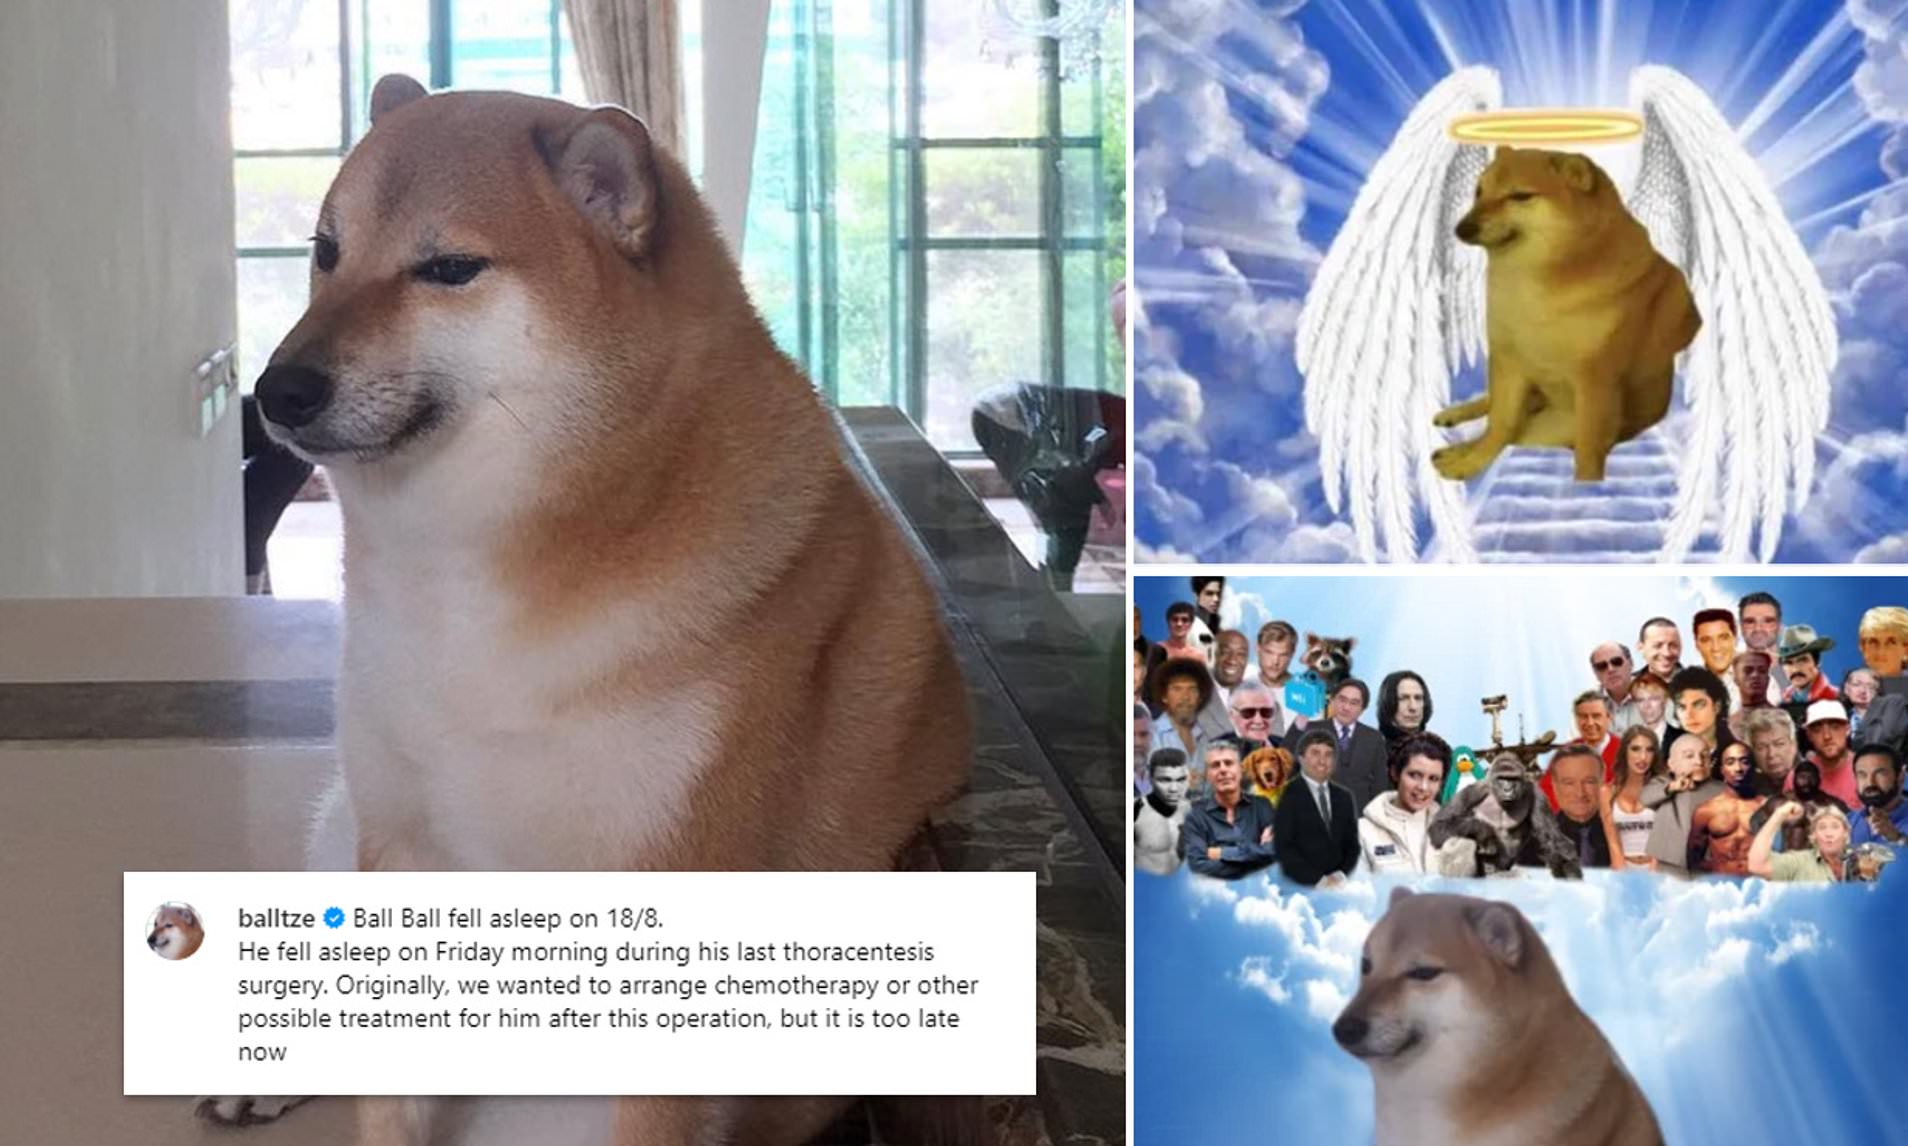 Cheems, viral meme dog, dies after battling cancer. Internet mourns - India Today